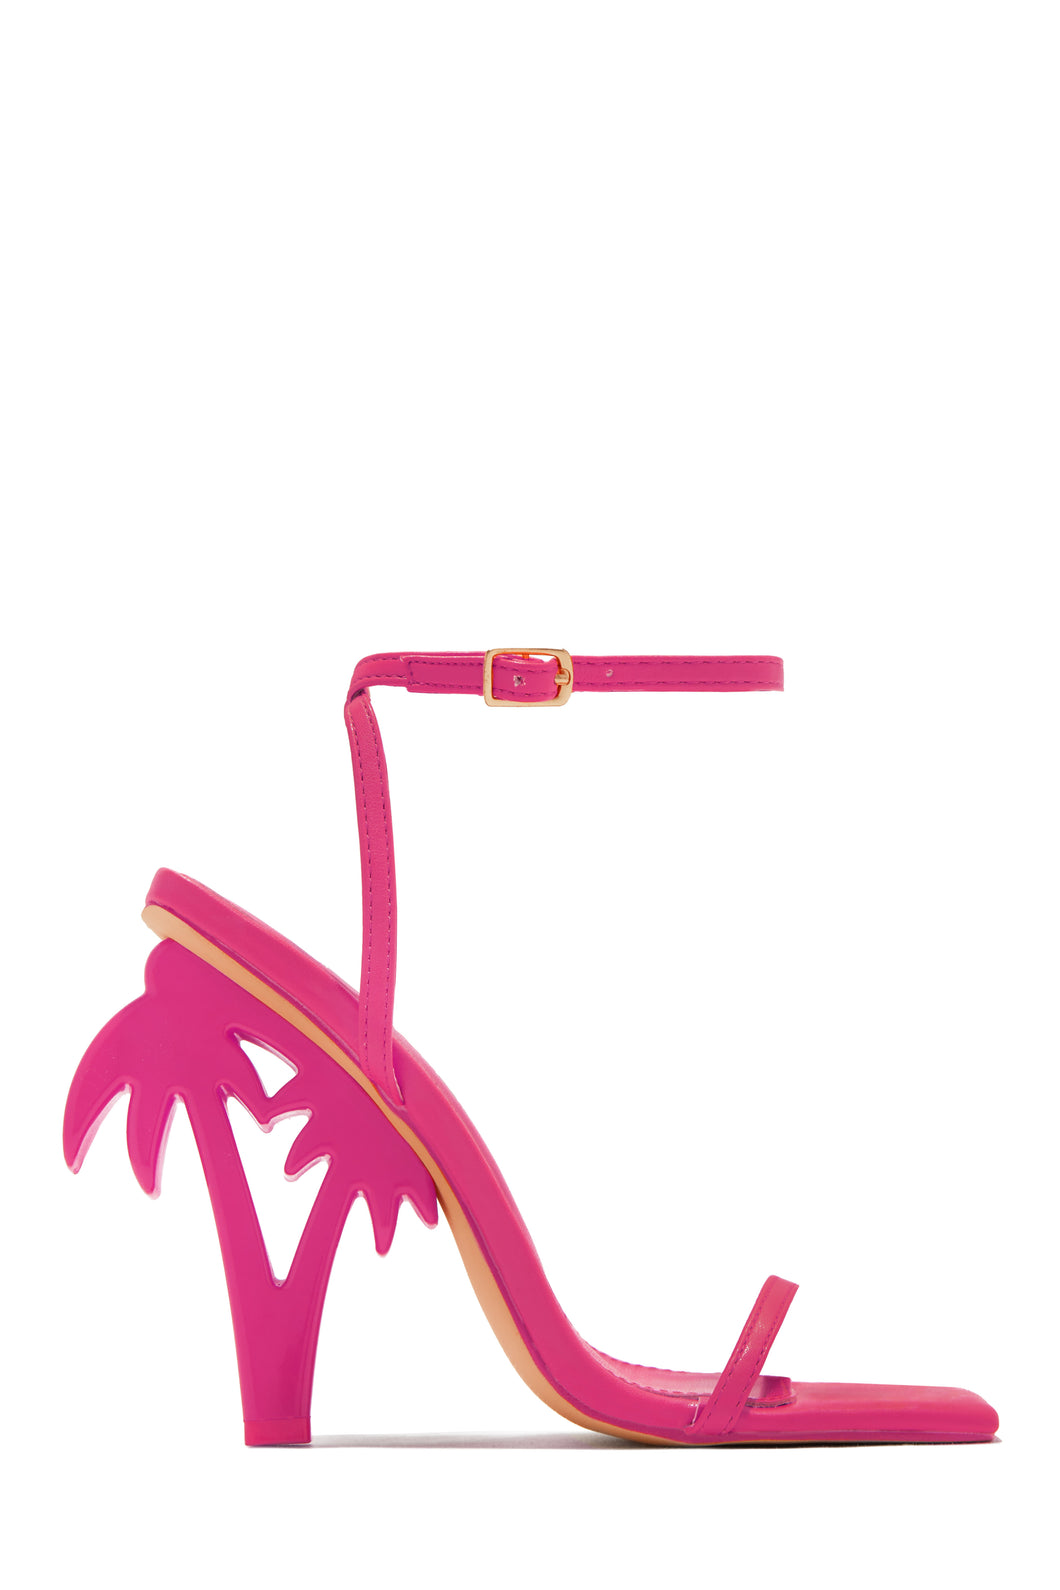 Palm Springs Palm Tree High Heels - Pink